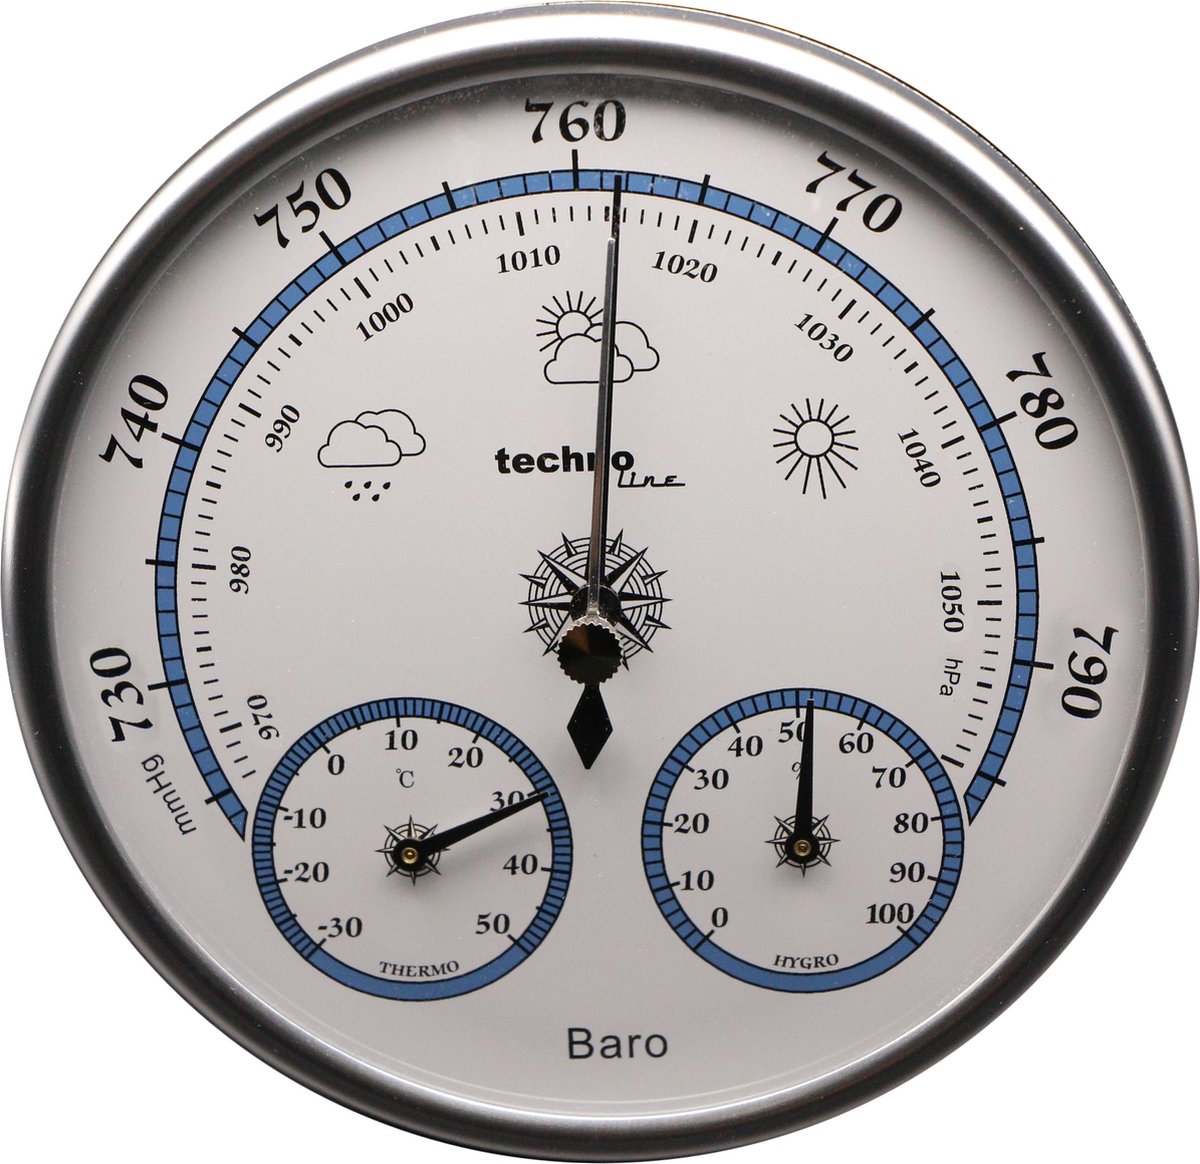 Thermometer / Hygrometer - Weervoorspelling - Technoline WA 3090